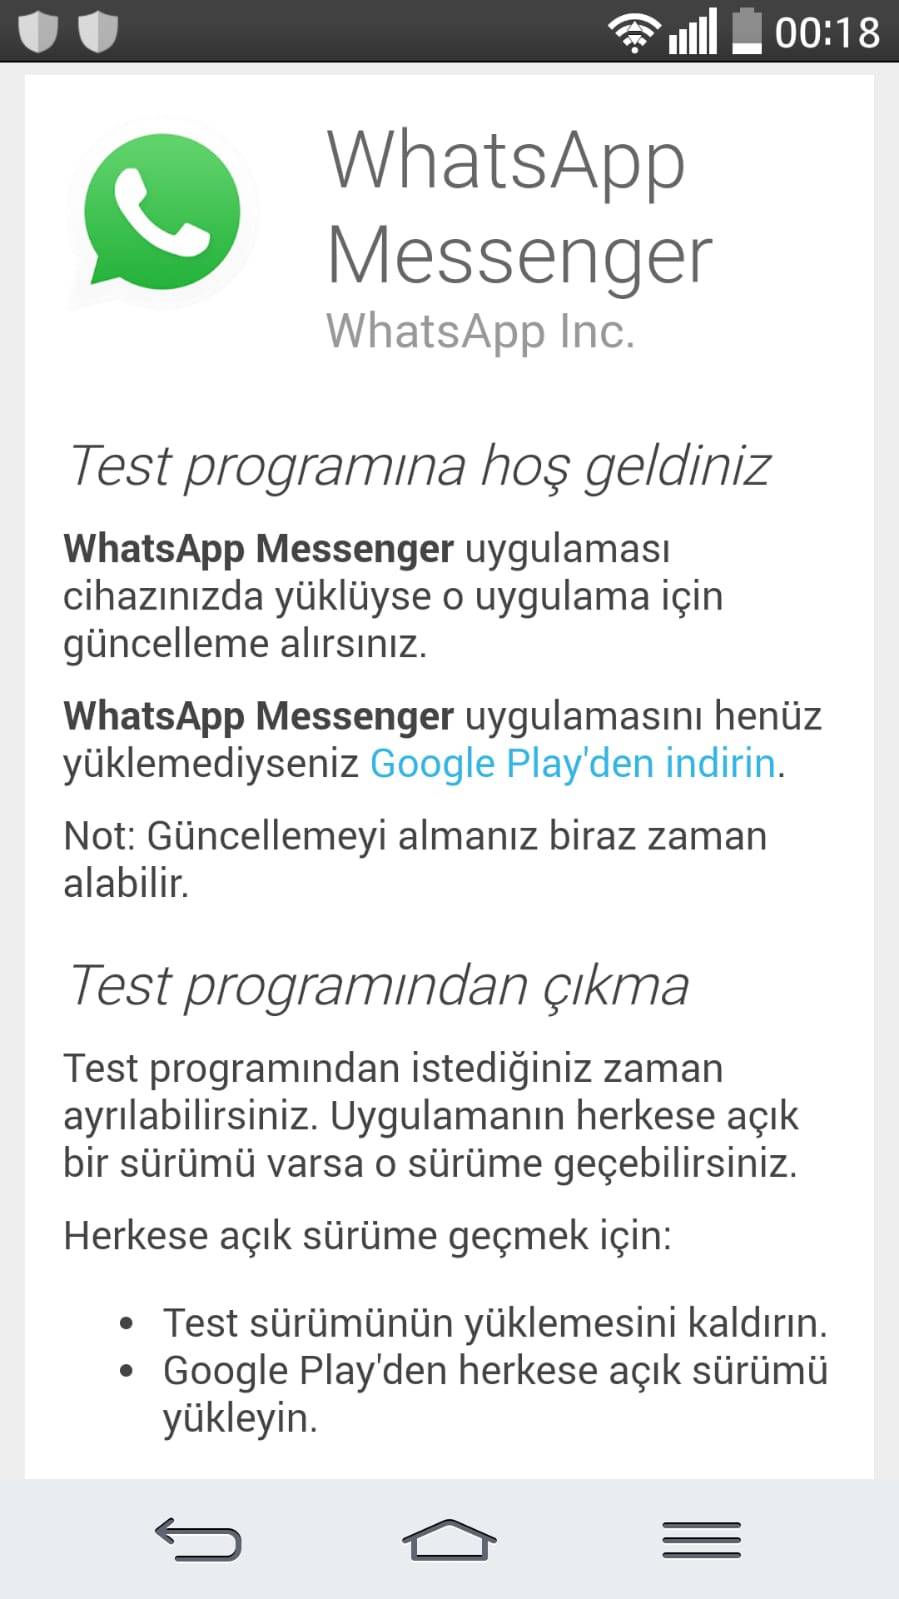 WhatsApp test programı nedir?